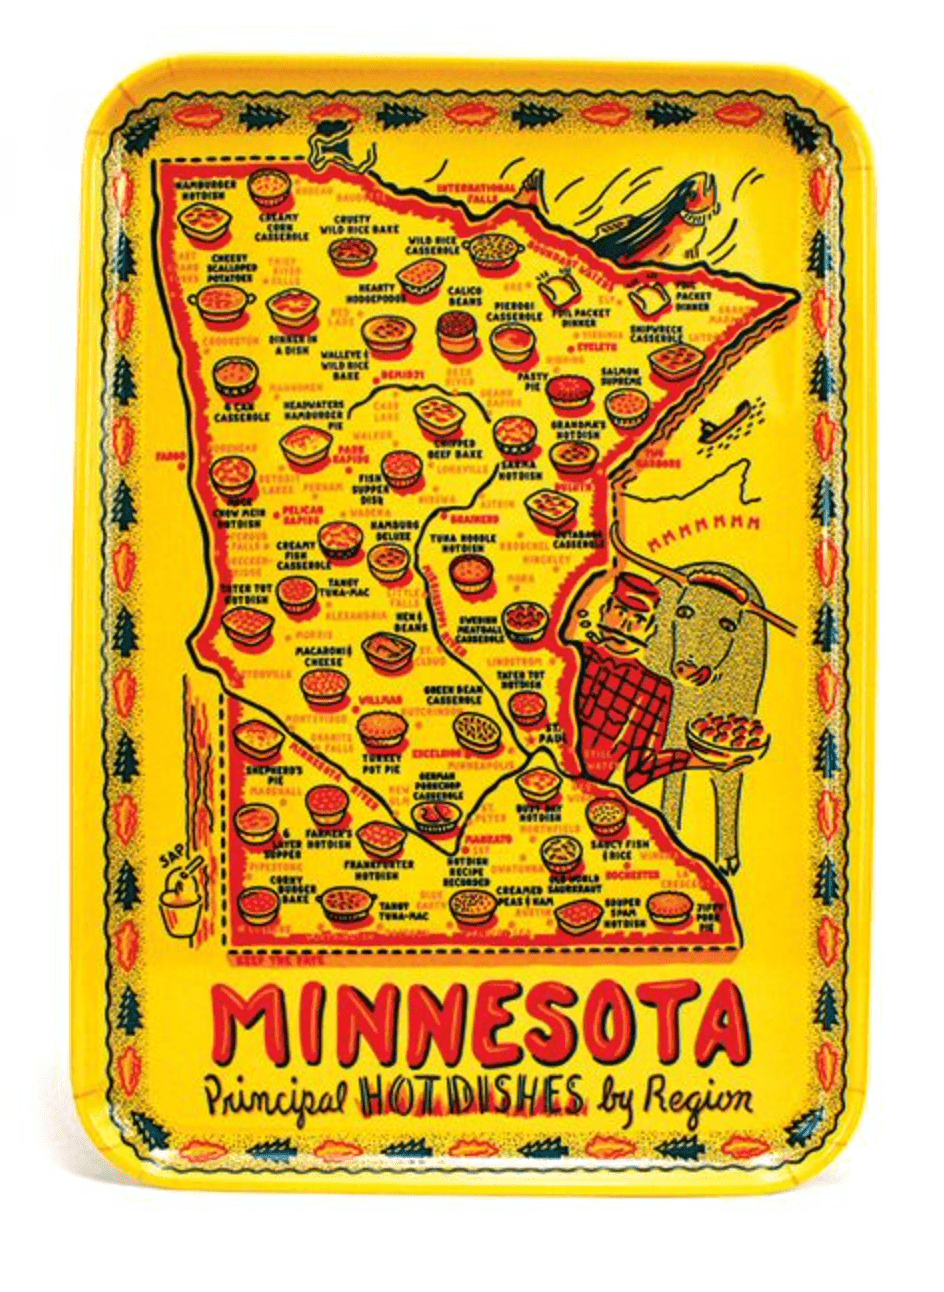 Minnesota Principle Hot Dishes by Region Tray